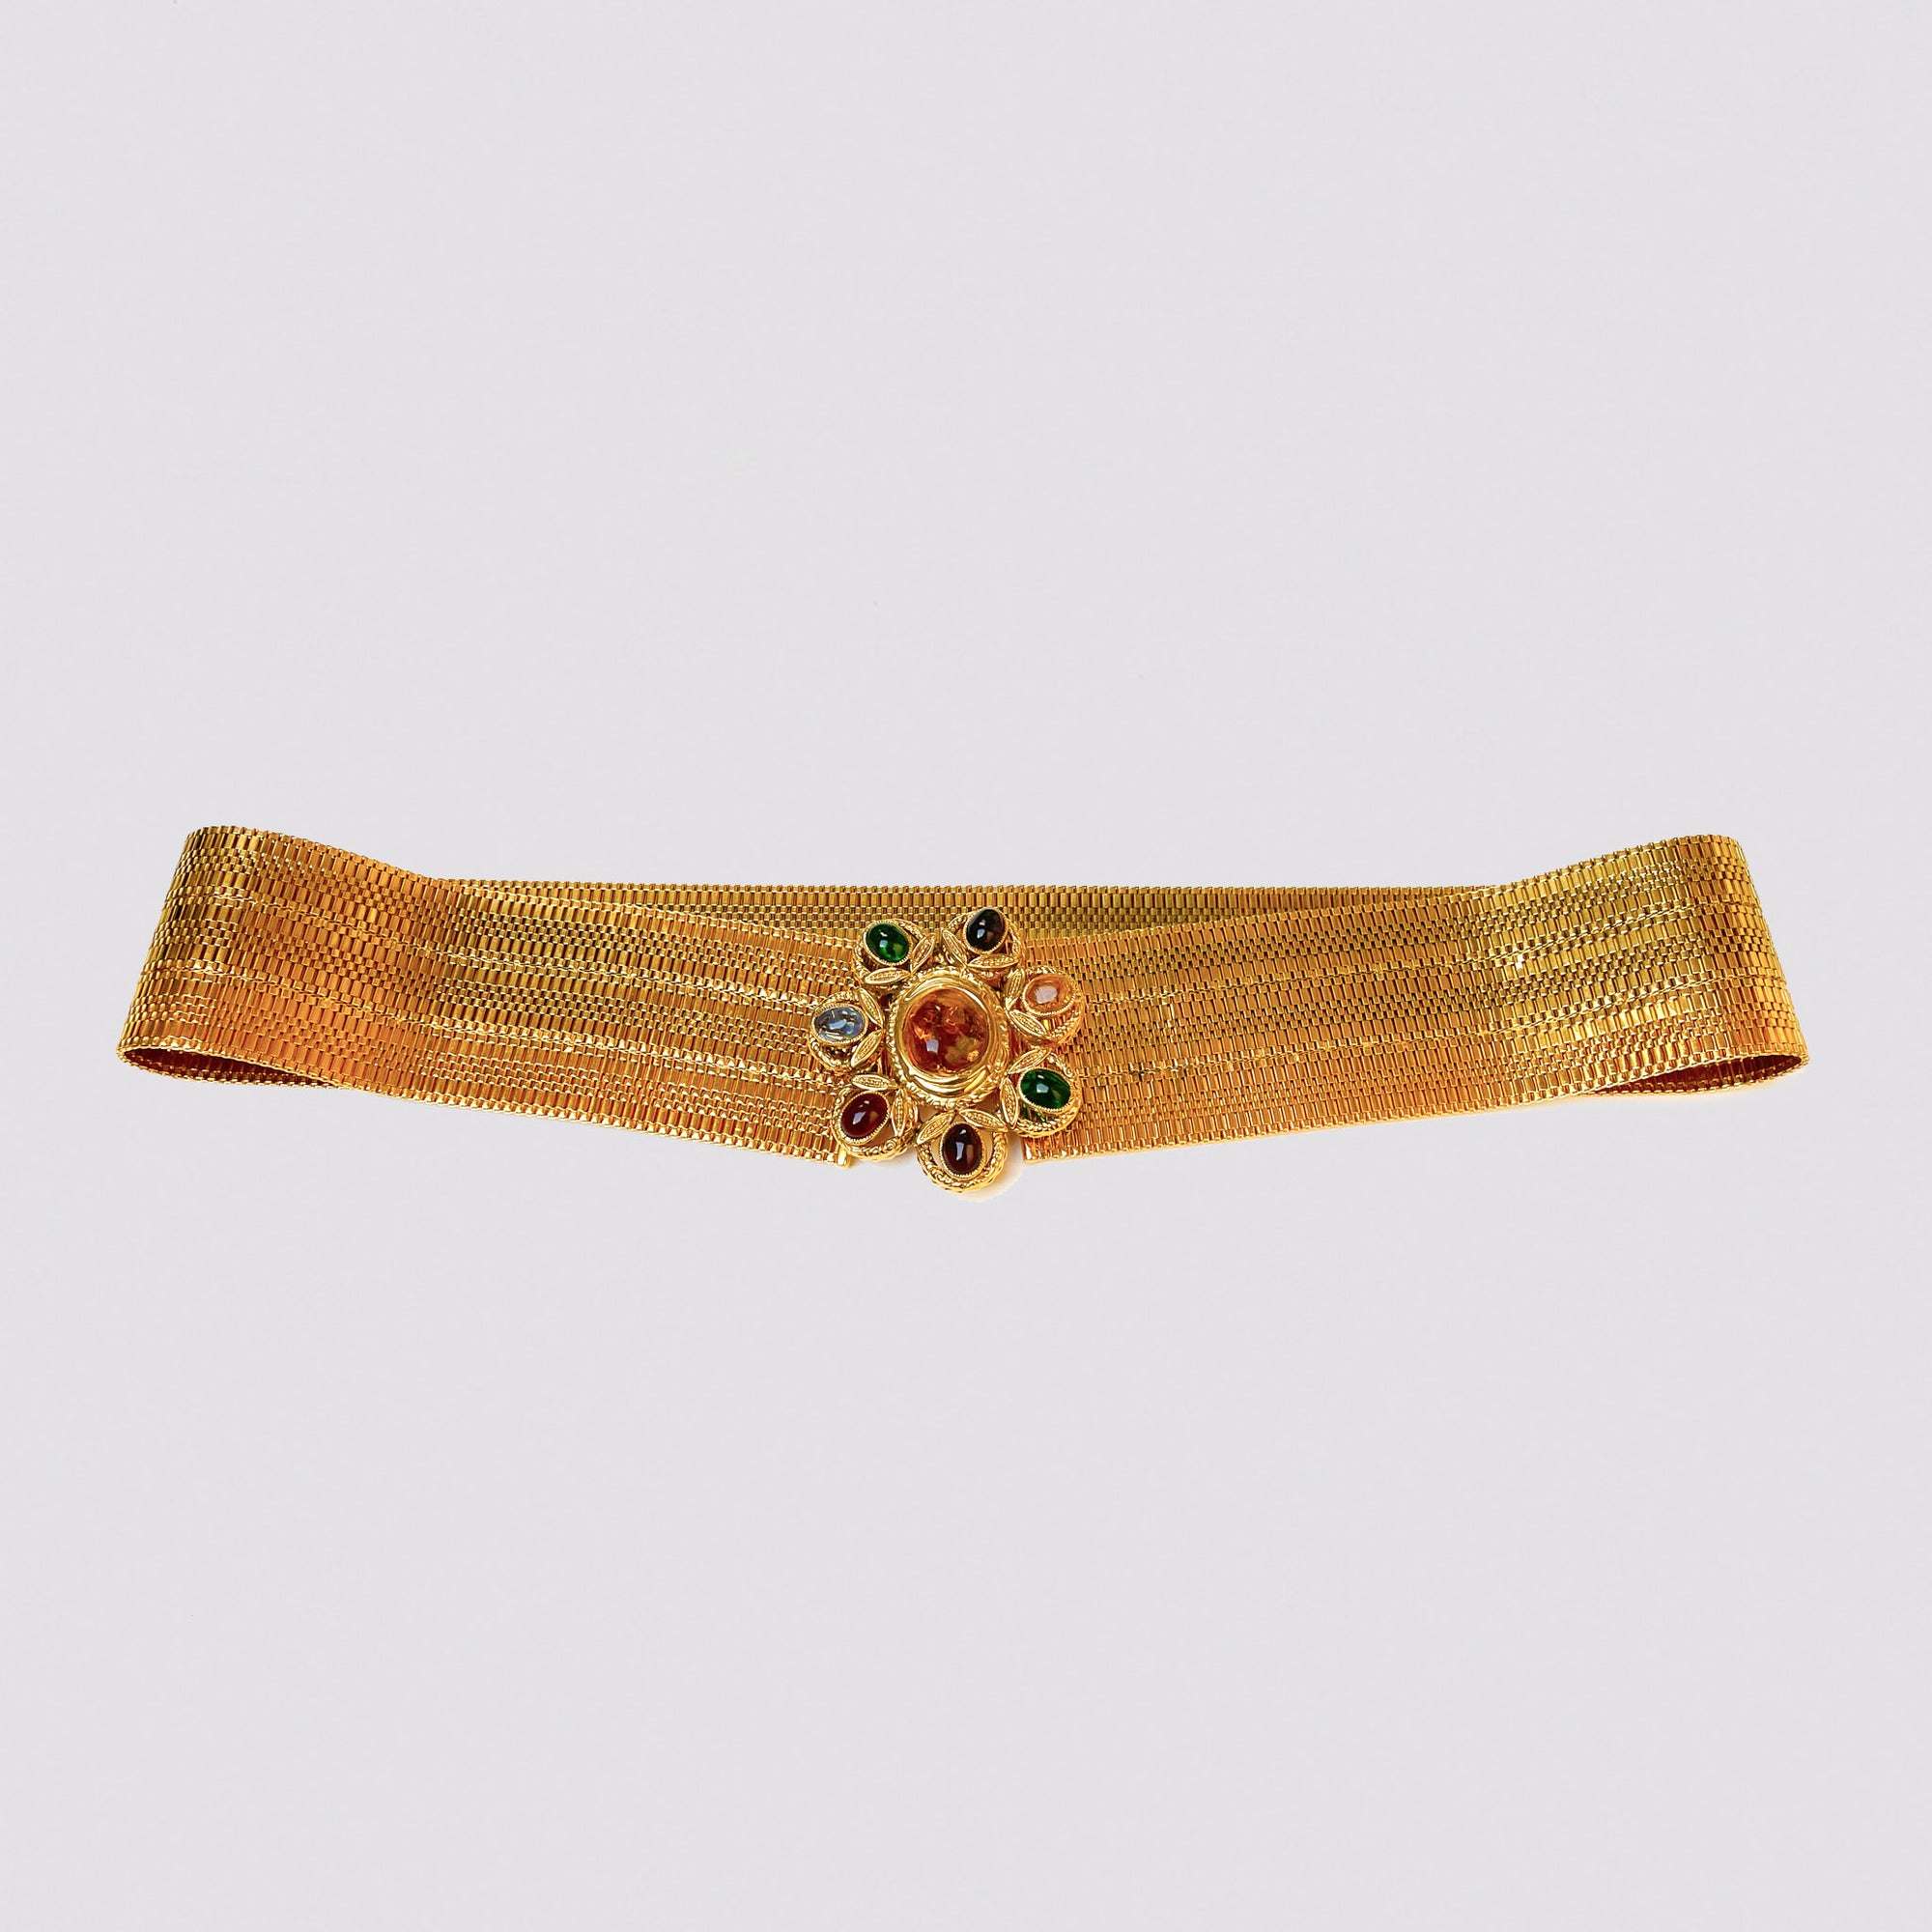 Vintage Chanel Gold Byzantine Belt